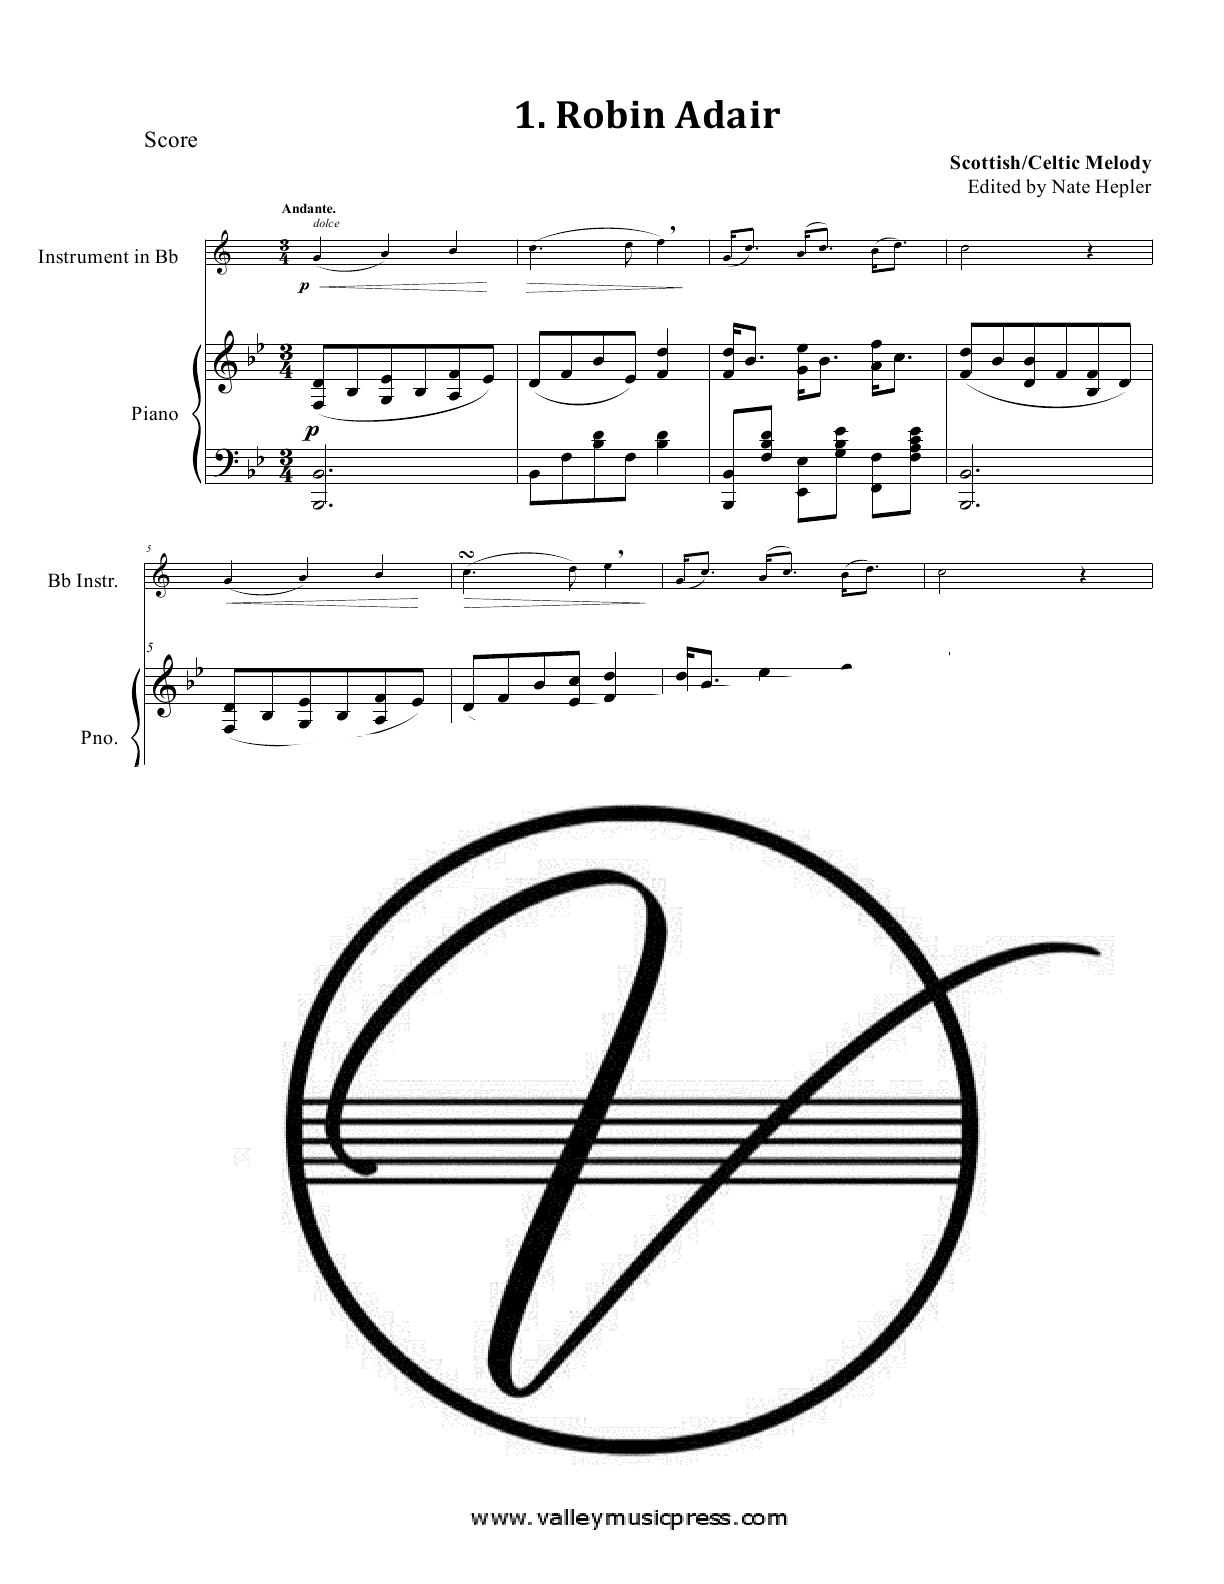 Arban Art of Phrasing Piano Accompaniment Vol. 3 No. 51-75 (Trp)